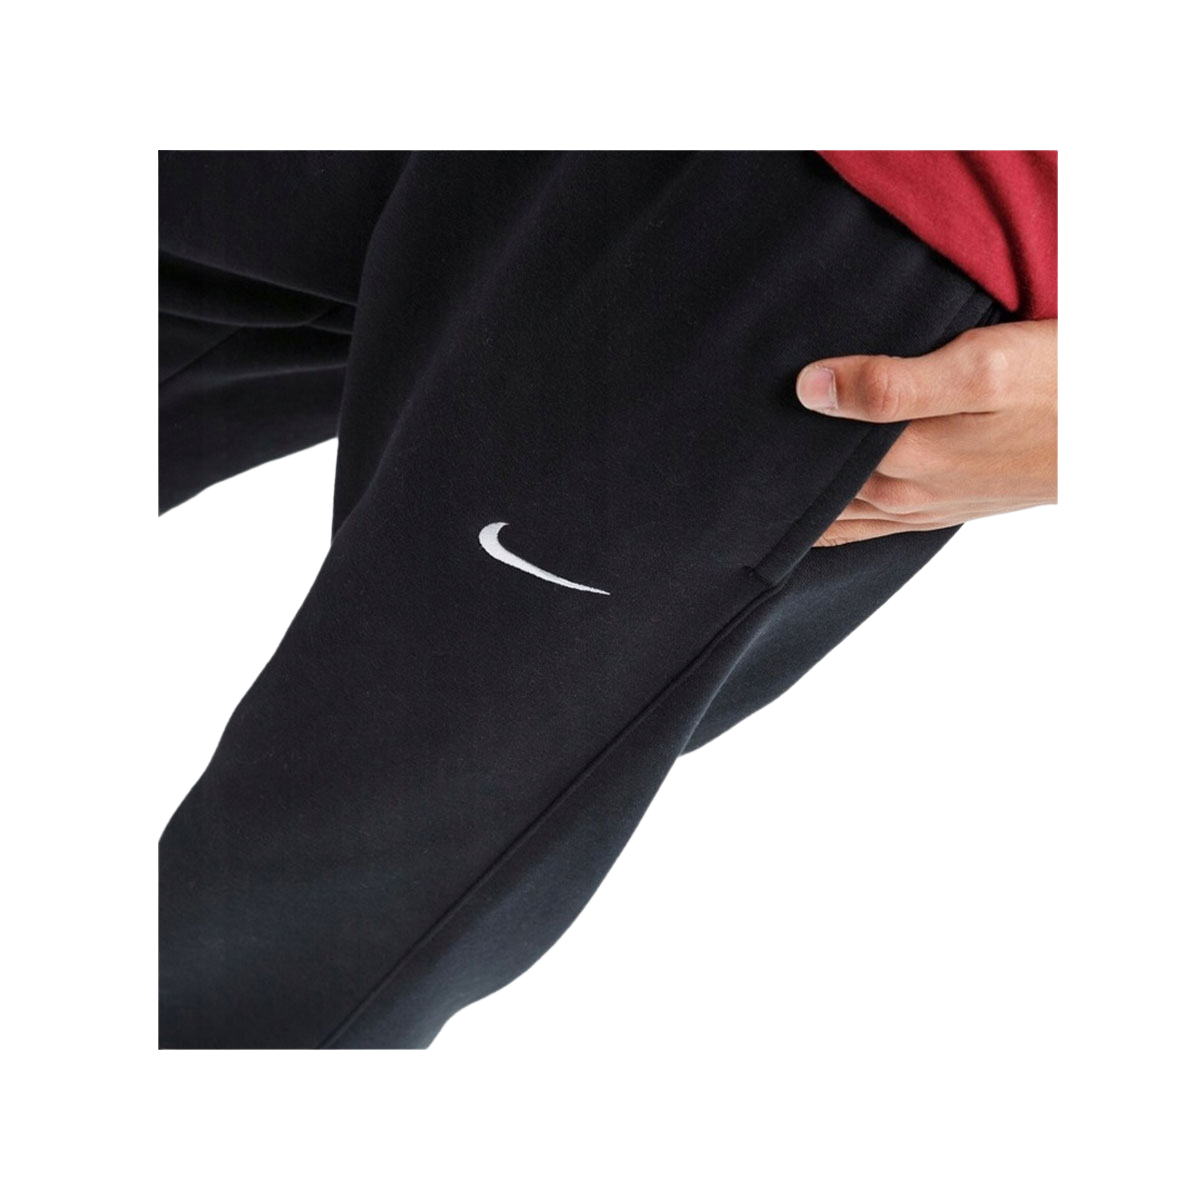 Nike Men's Flex Training Trousers